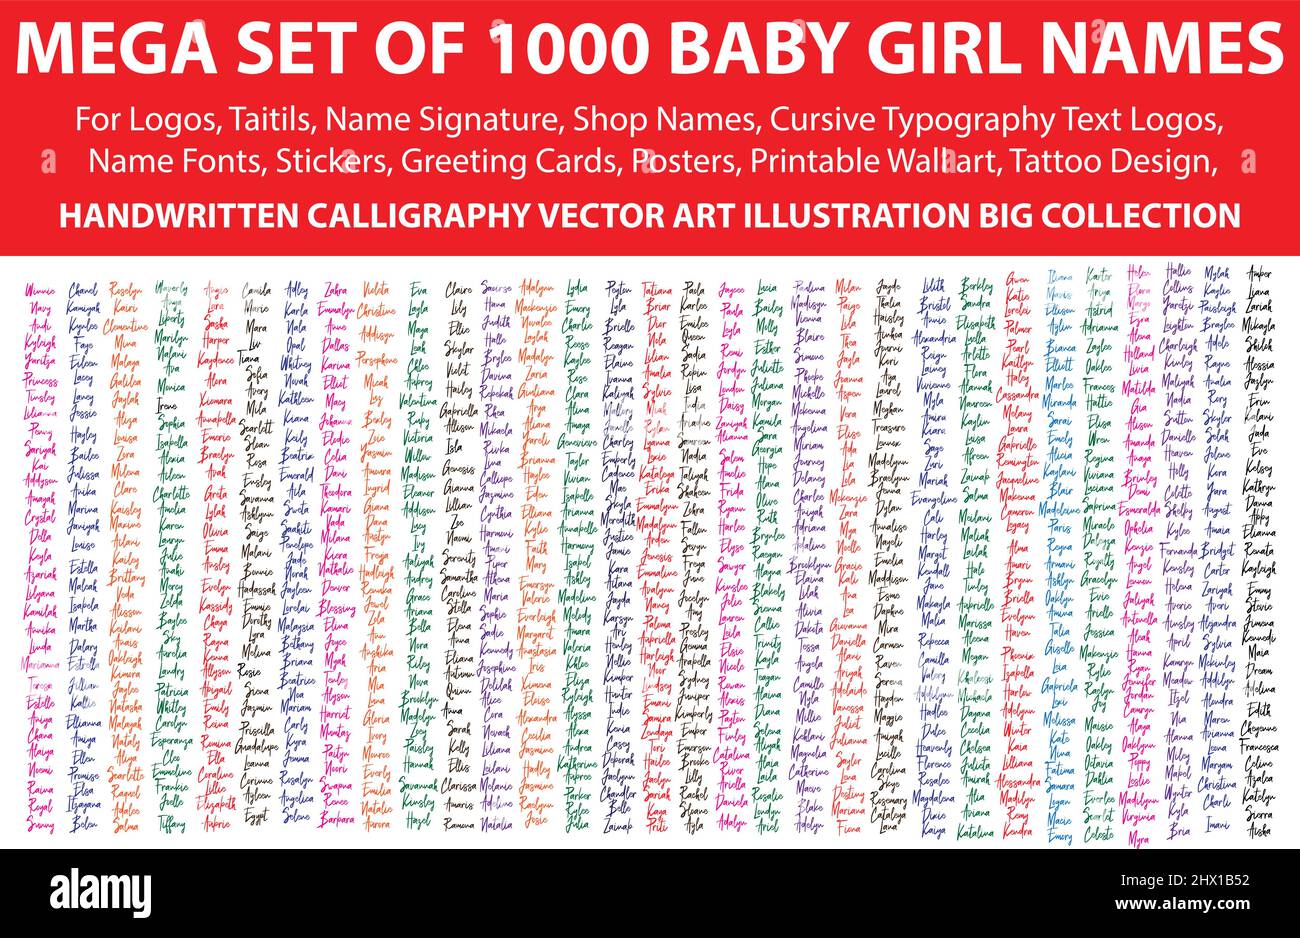 Mega Set of 1000 Baby Girl Names For Logos, Name Signature, Shop Names, Name Fonts, Cursive Typography Text Logos, Stickers,  Handwritten Calligraphy Stock Vector